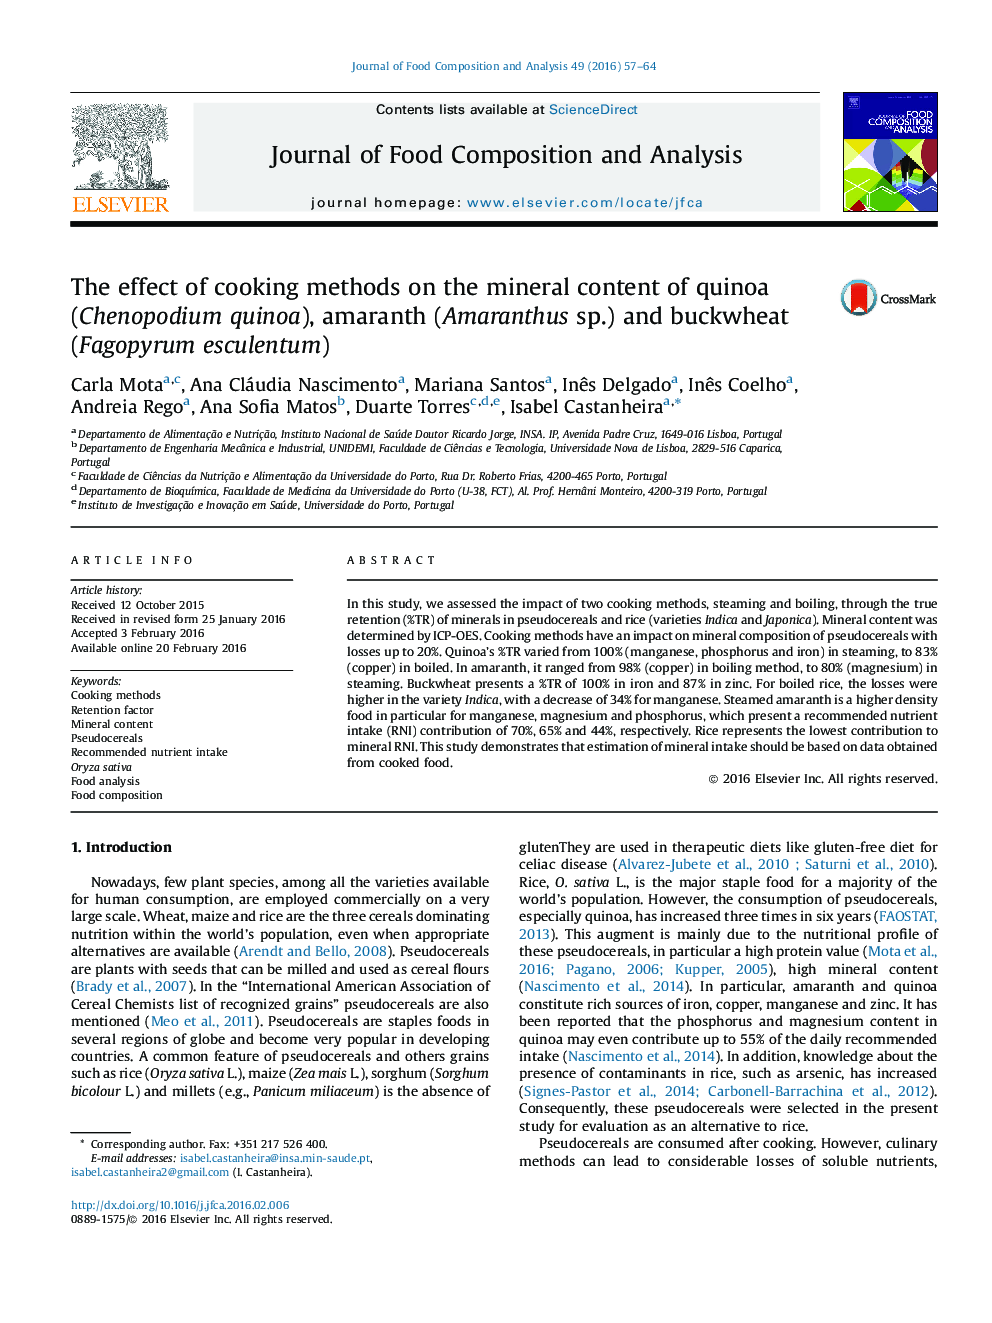 The effect of cooking methods on the mineral content of quinoa (Chenopodium quinoa), amaranth (Amaranthus sp.) and buckwheat (Fagopyrum esculentum)